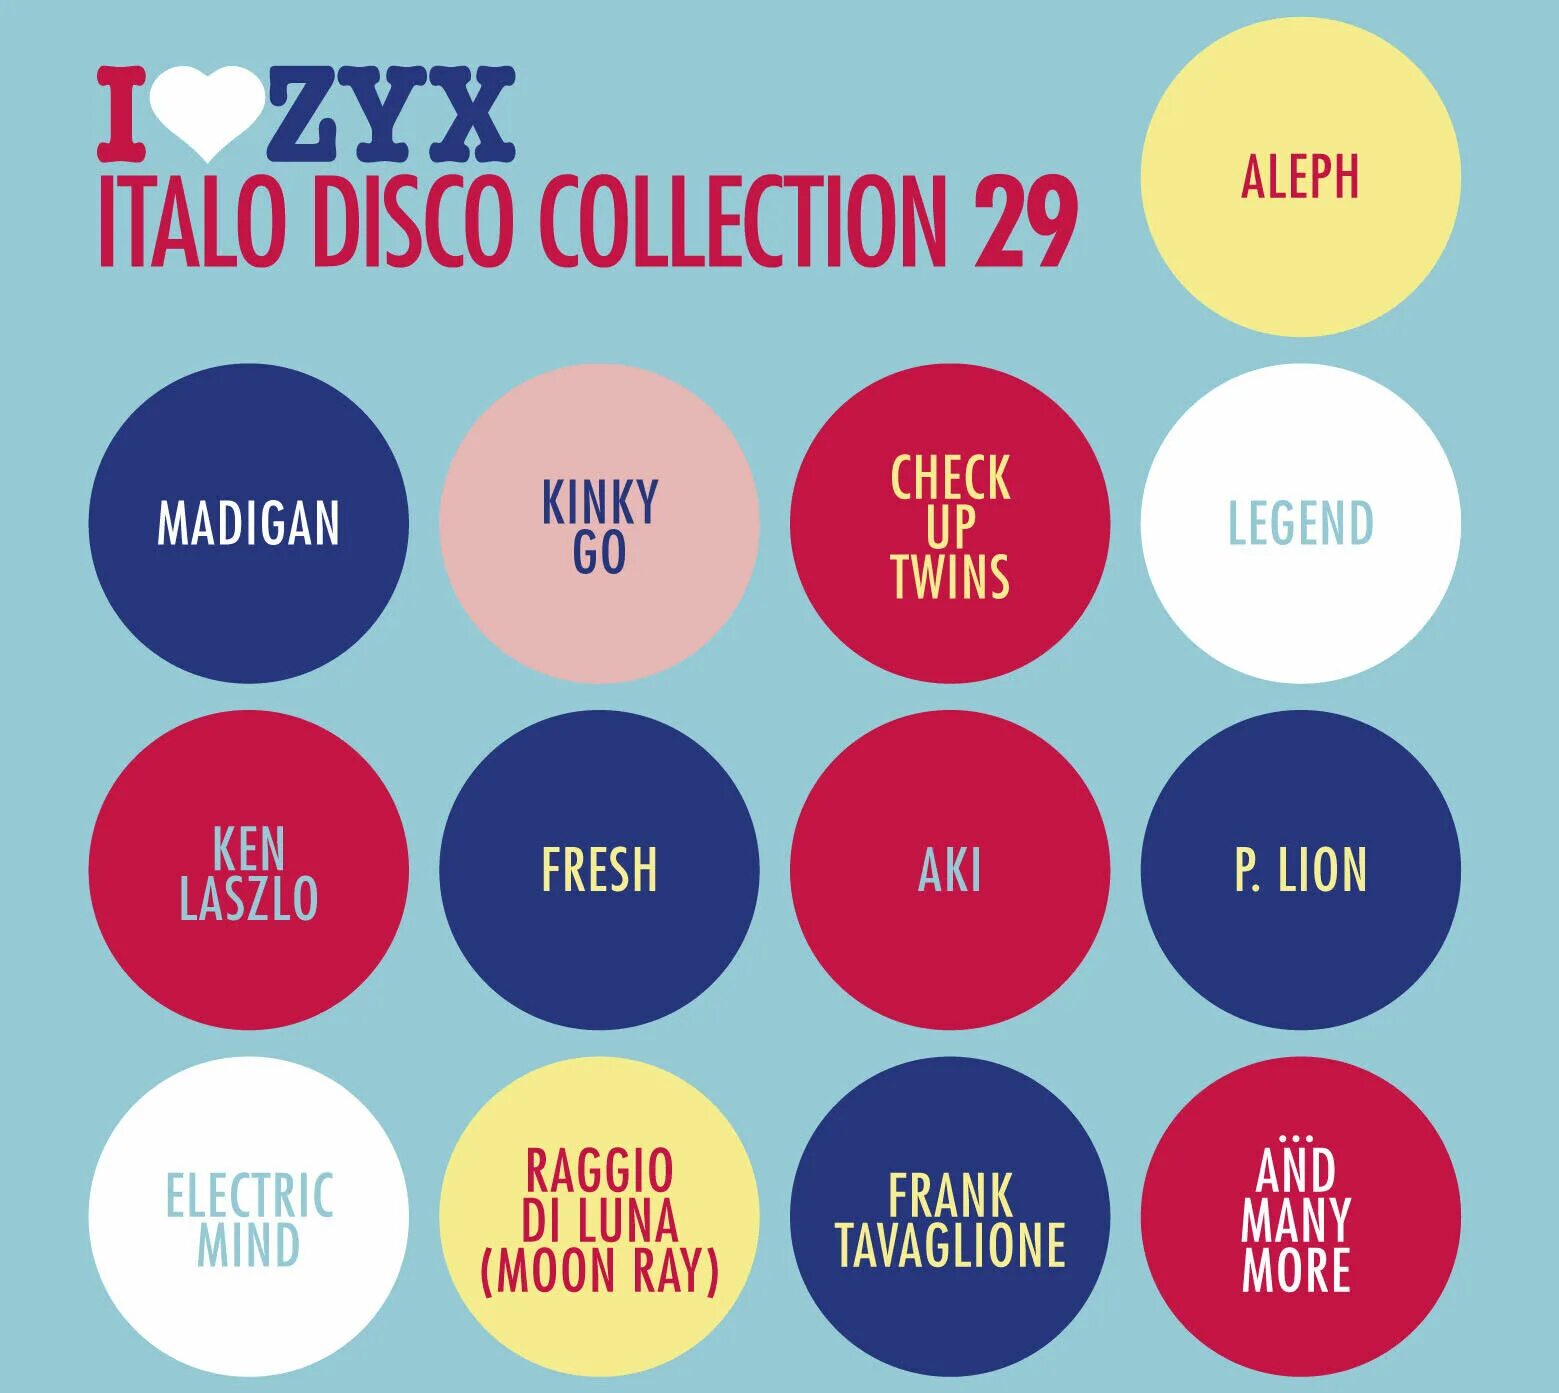 I Love ZYX Italo Disco collection 29. I Love ZYX Italo Disco collection. I Love ZYX Italo Disco collection 26. ZYX Disco collection. Italo disco collection